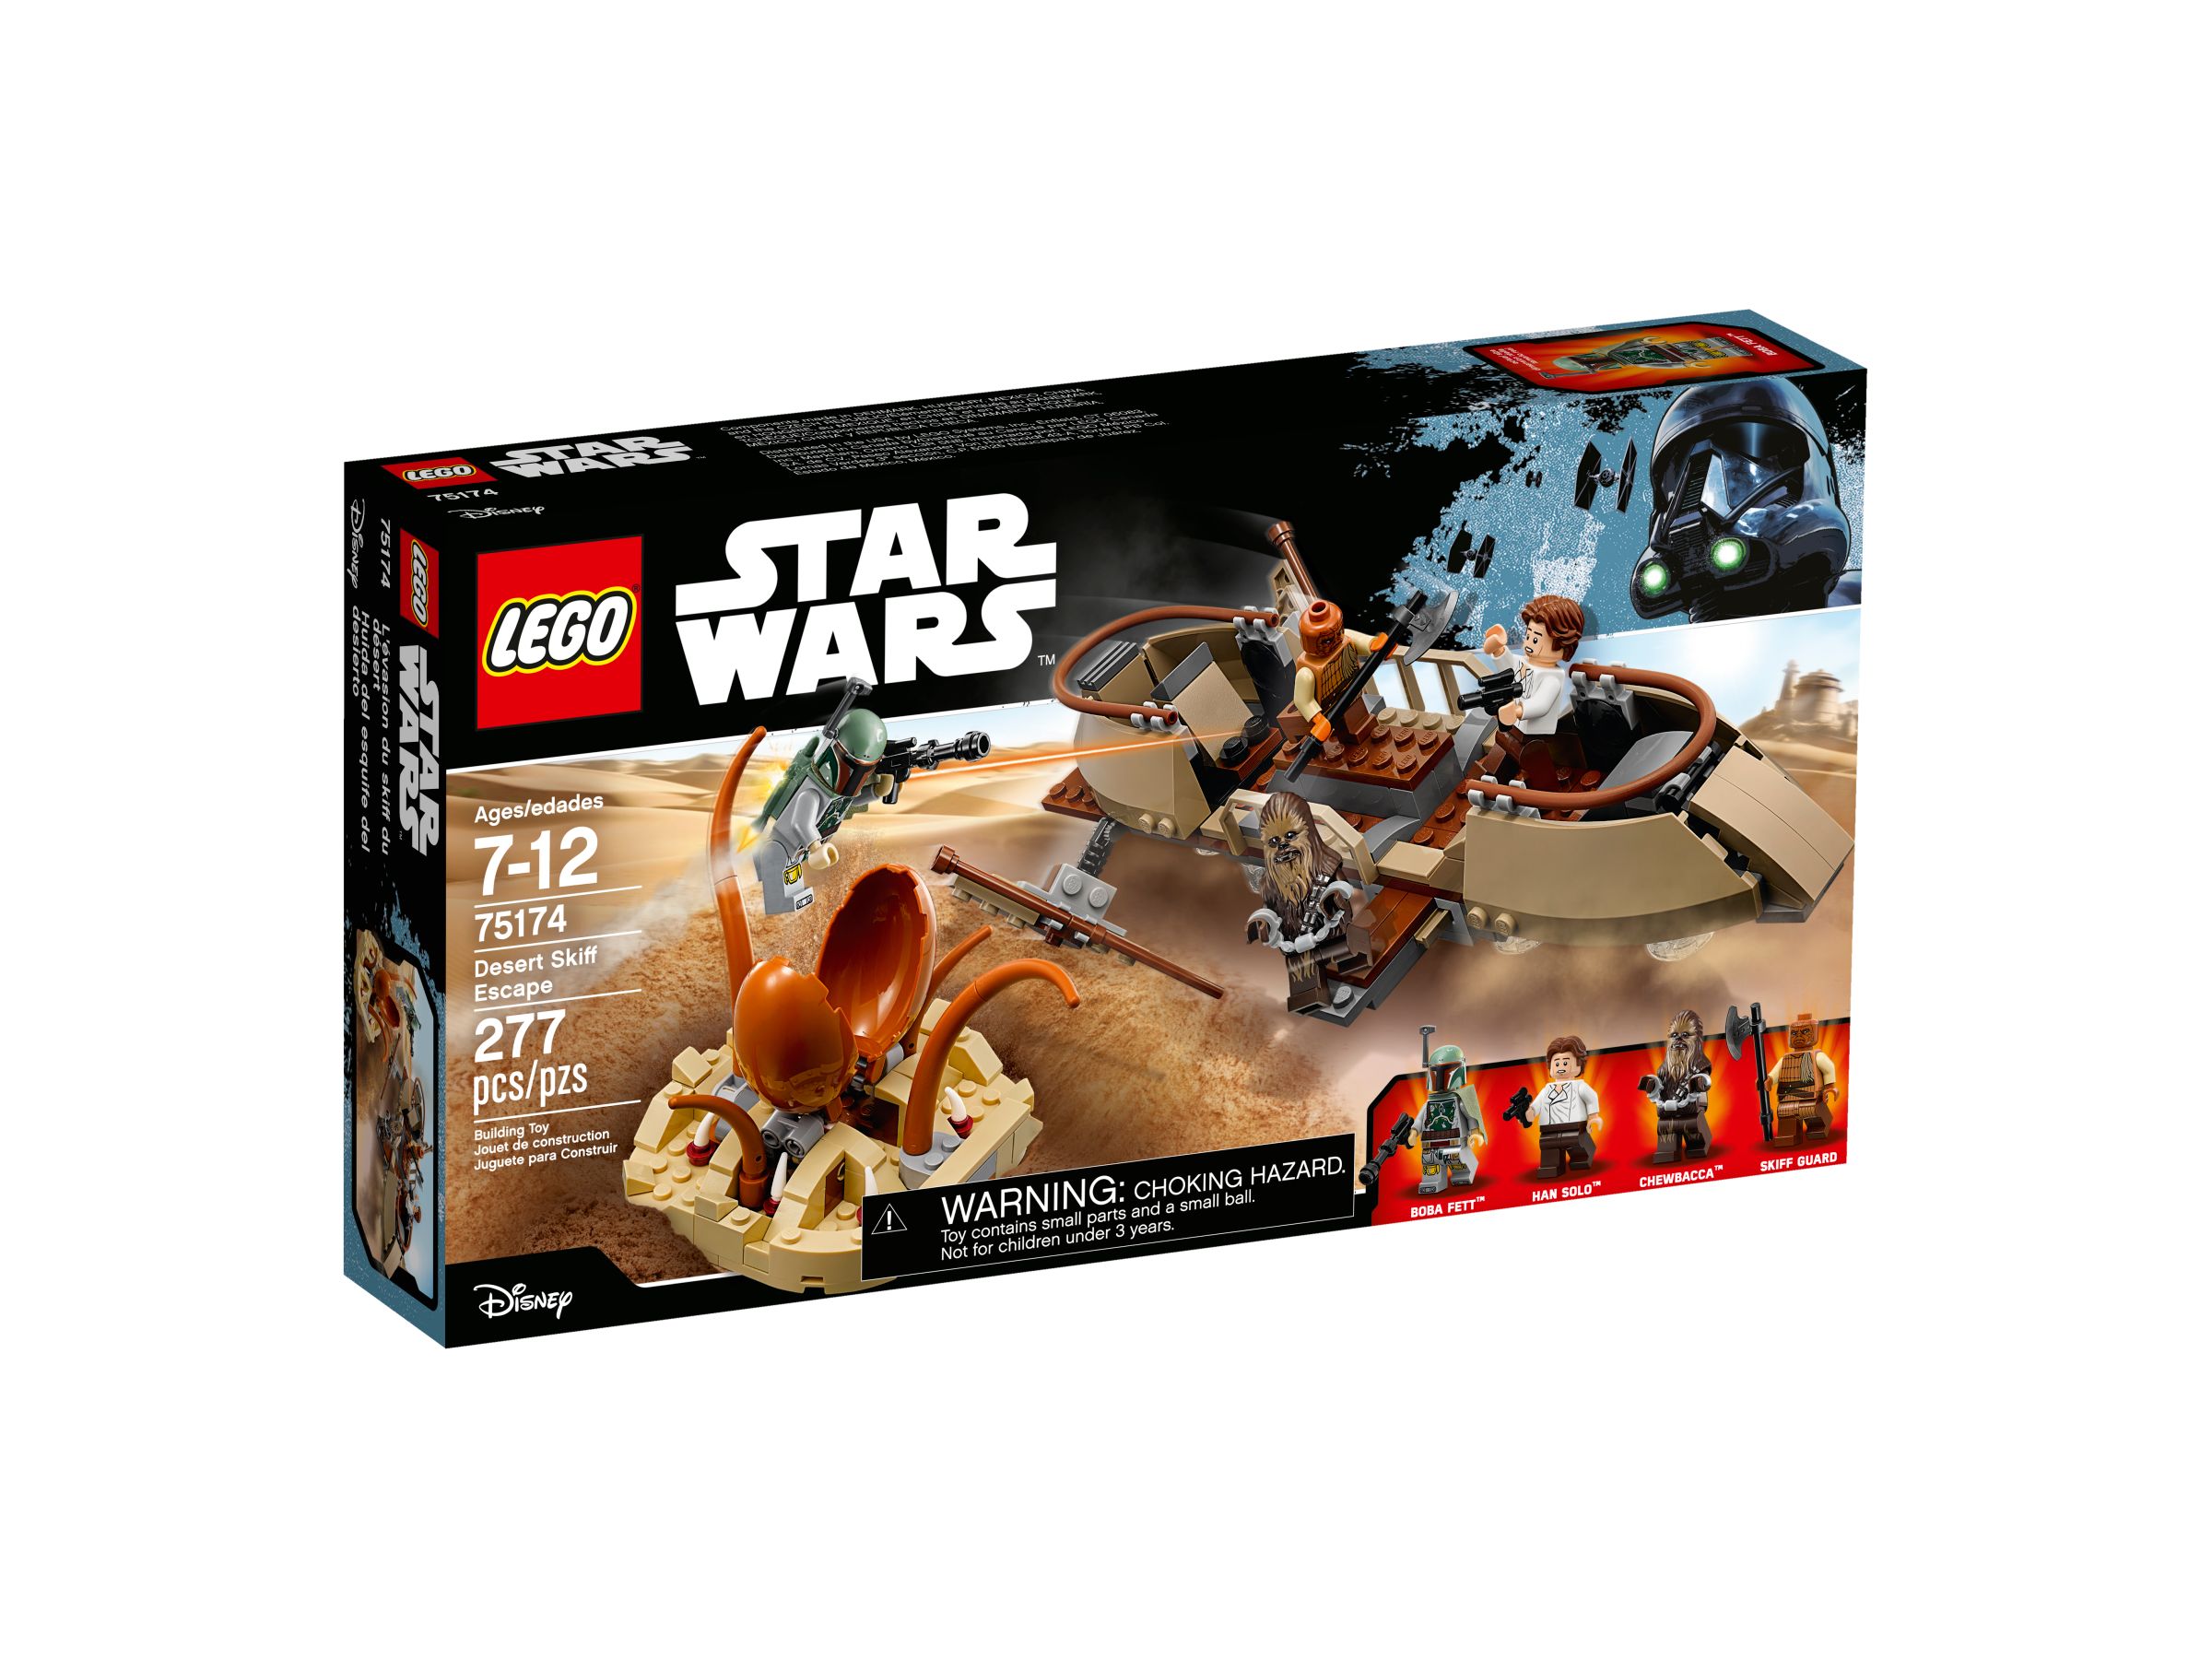 LEGO Star Wars 75174 Desert Skiff Escape LEGO_75174_alt1.jpg